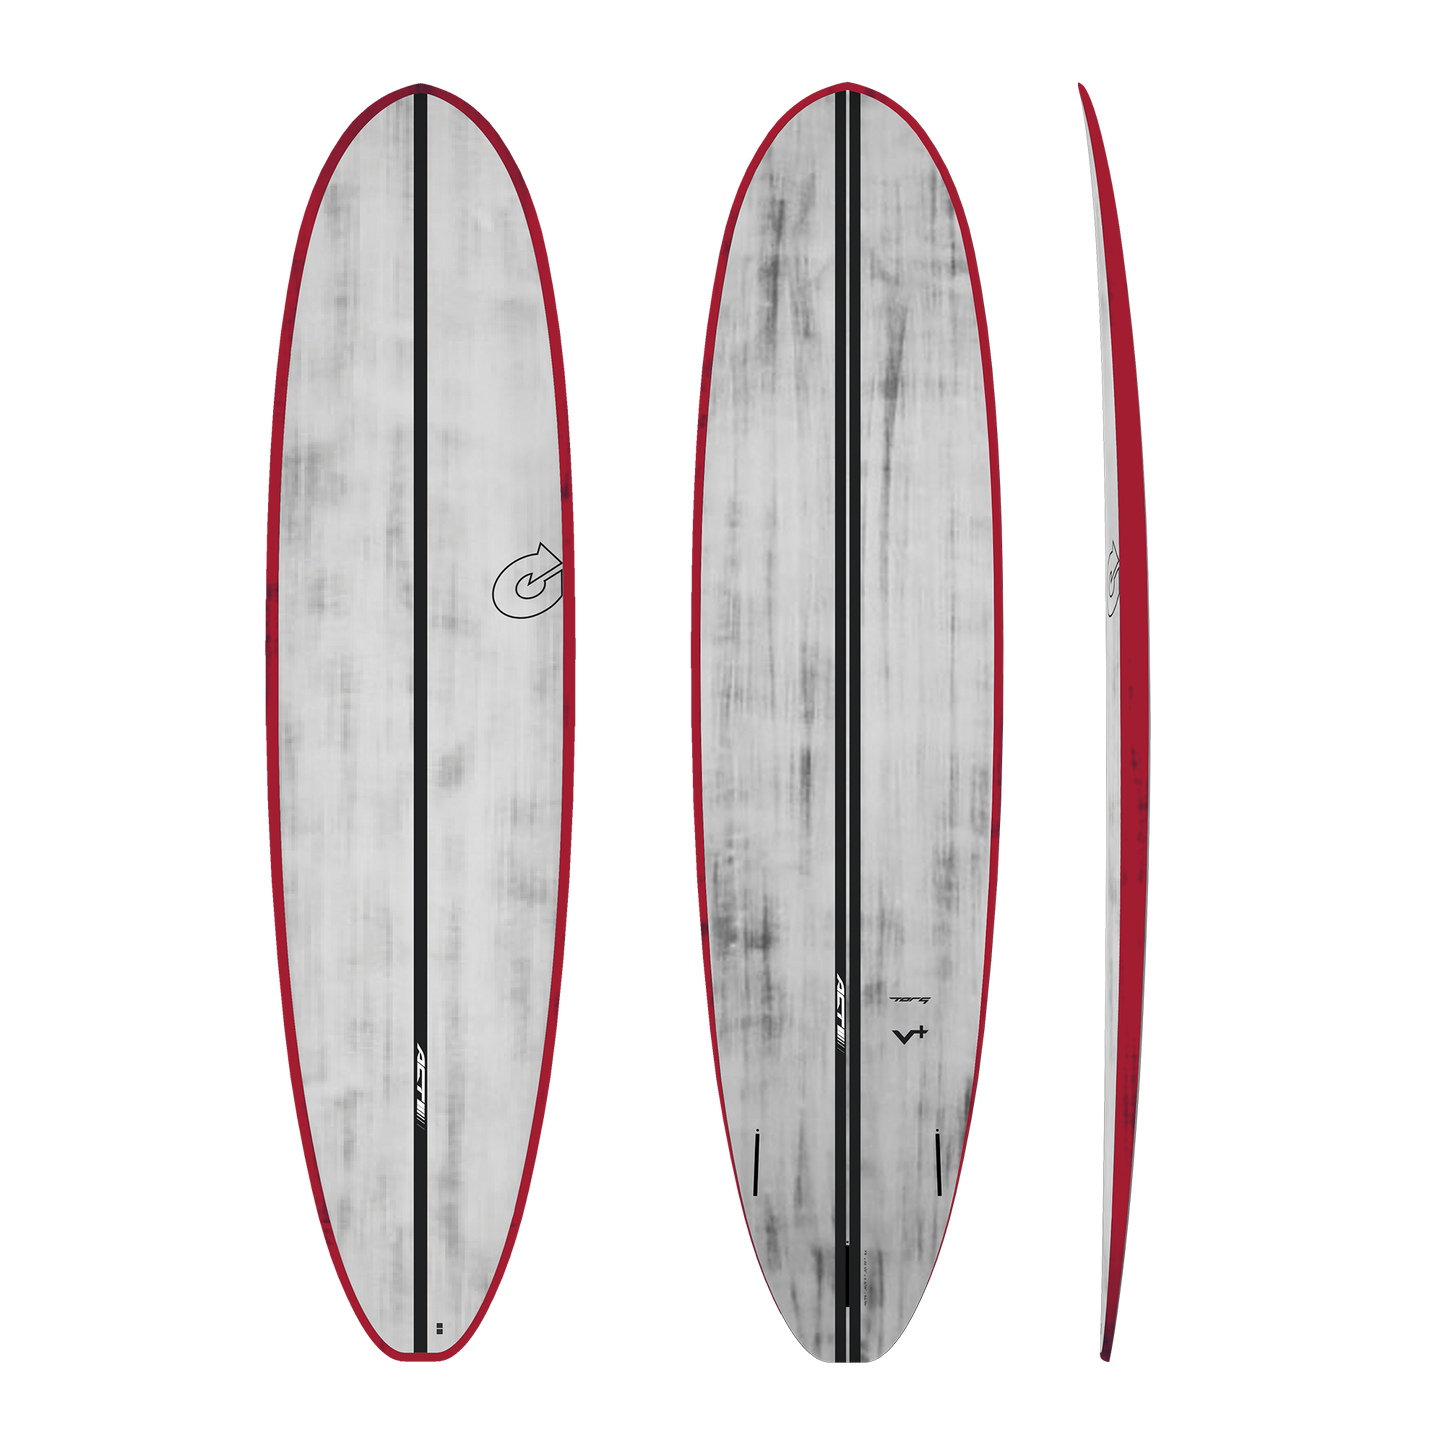 Torq ACT V+ Carbon Fiber Surfboard 7’4 x 22” x 3”- 55.9 ltr Red Rails Surfboard